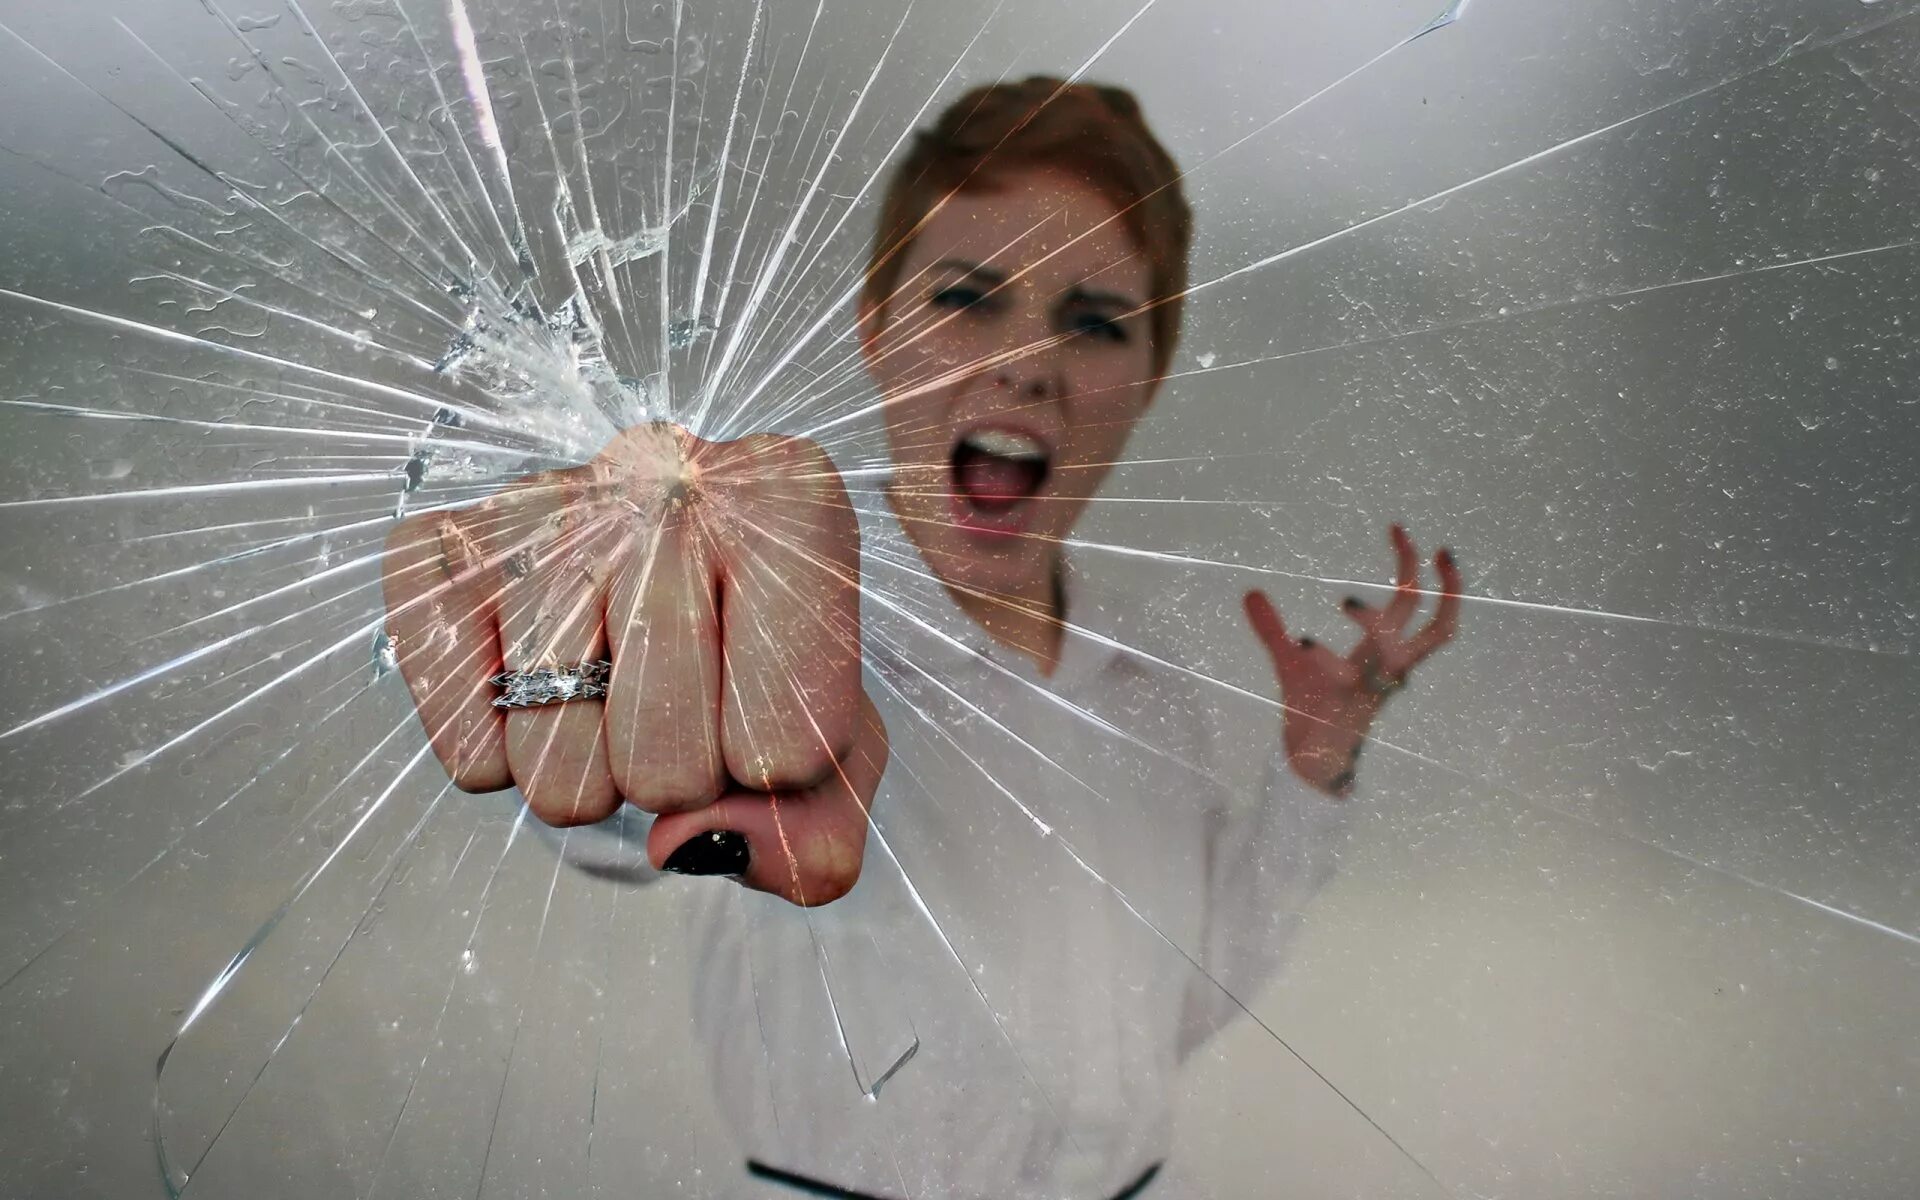 Разбитое стекло. Человек разбивает стекло. Разбить стекло. Фотосессия с разбитым стеклом.